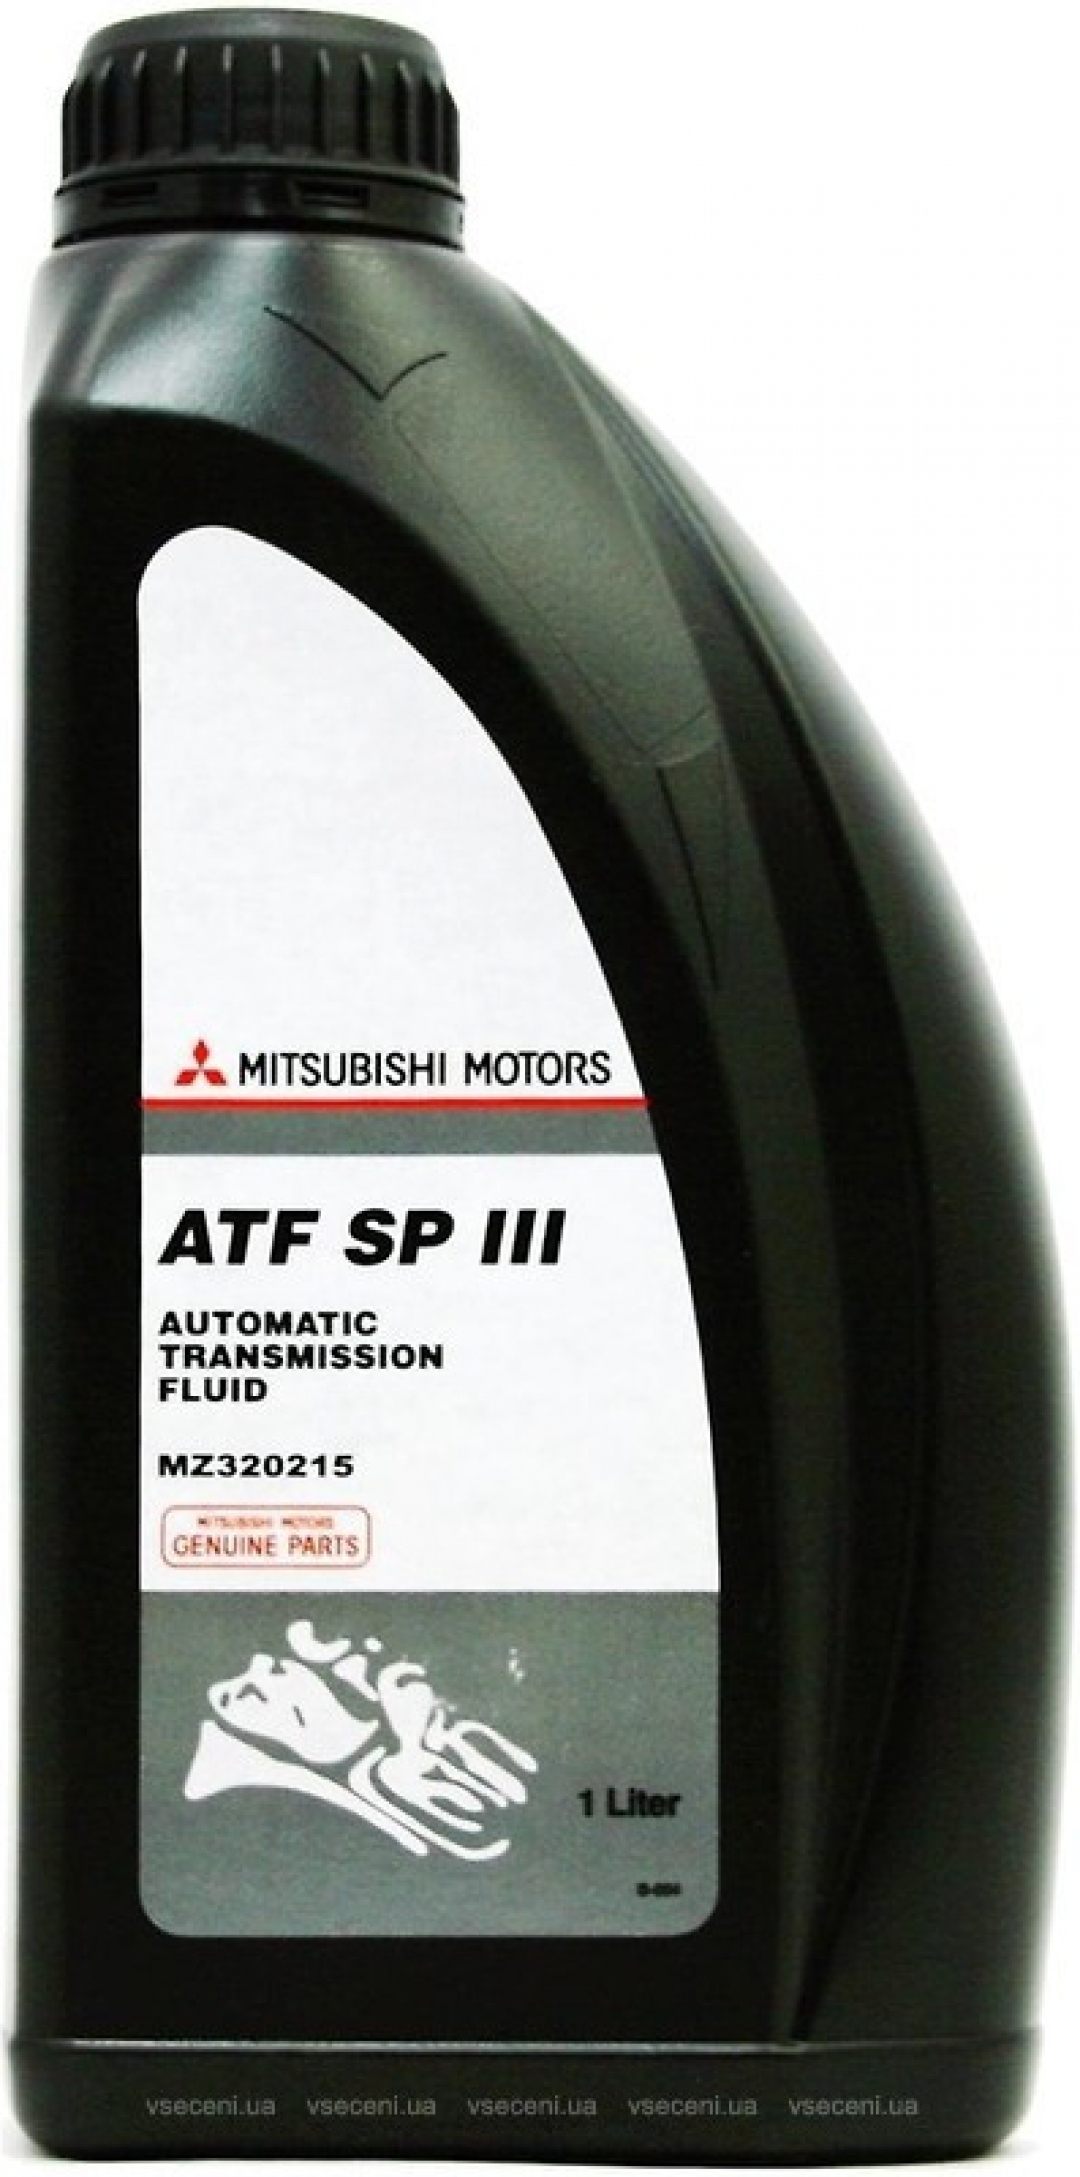 Mitsubishi ATF SP III EURO MZ320215 - 8607